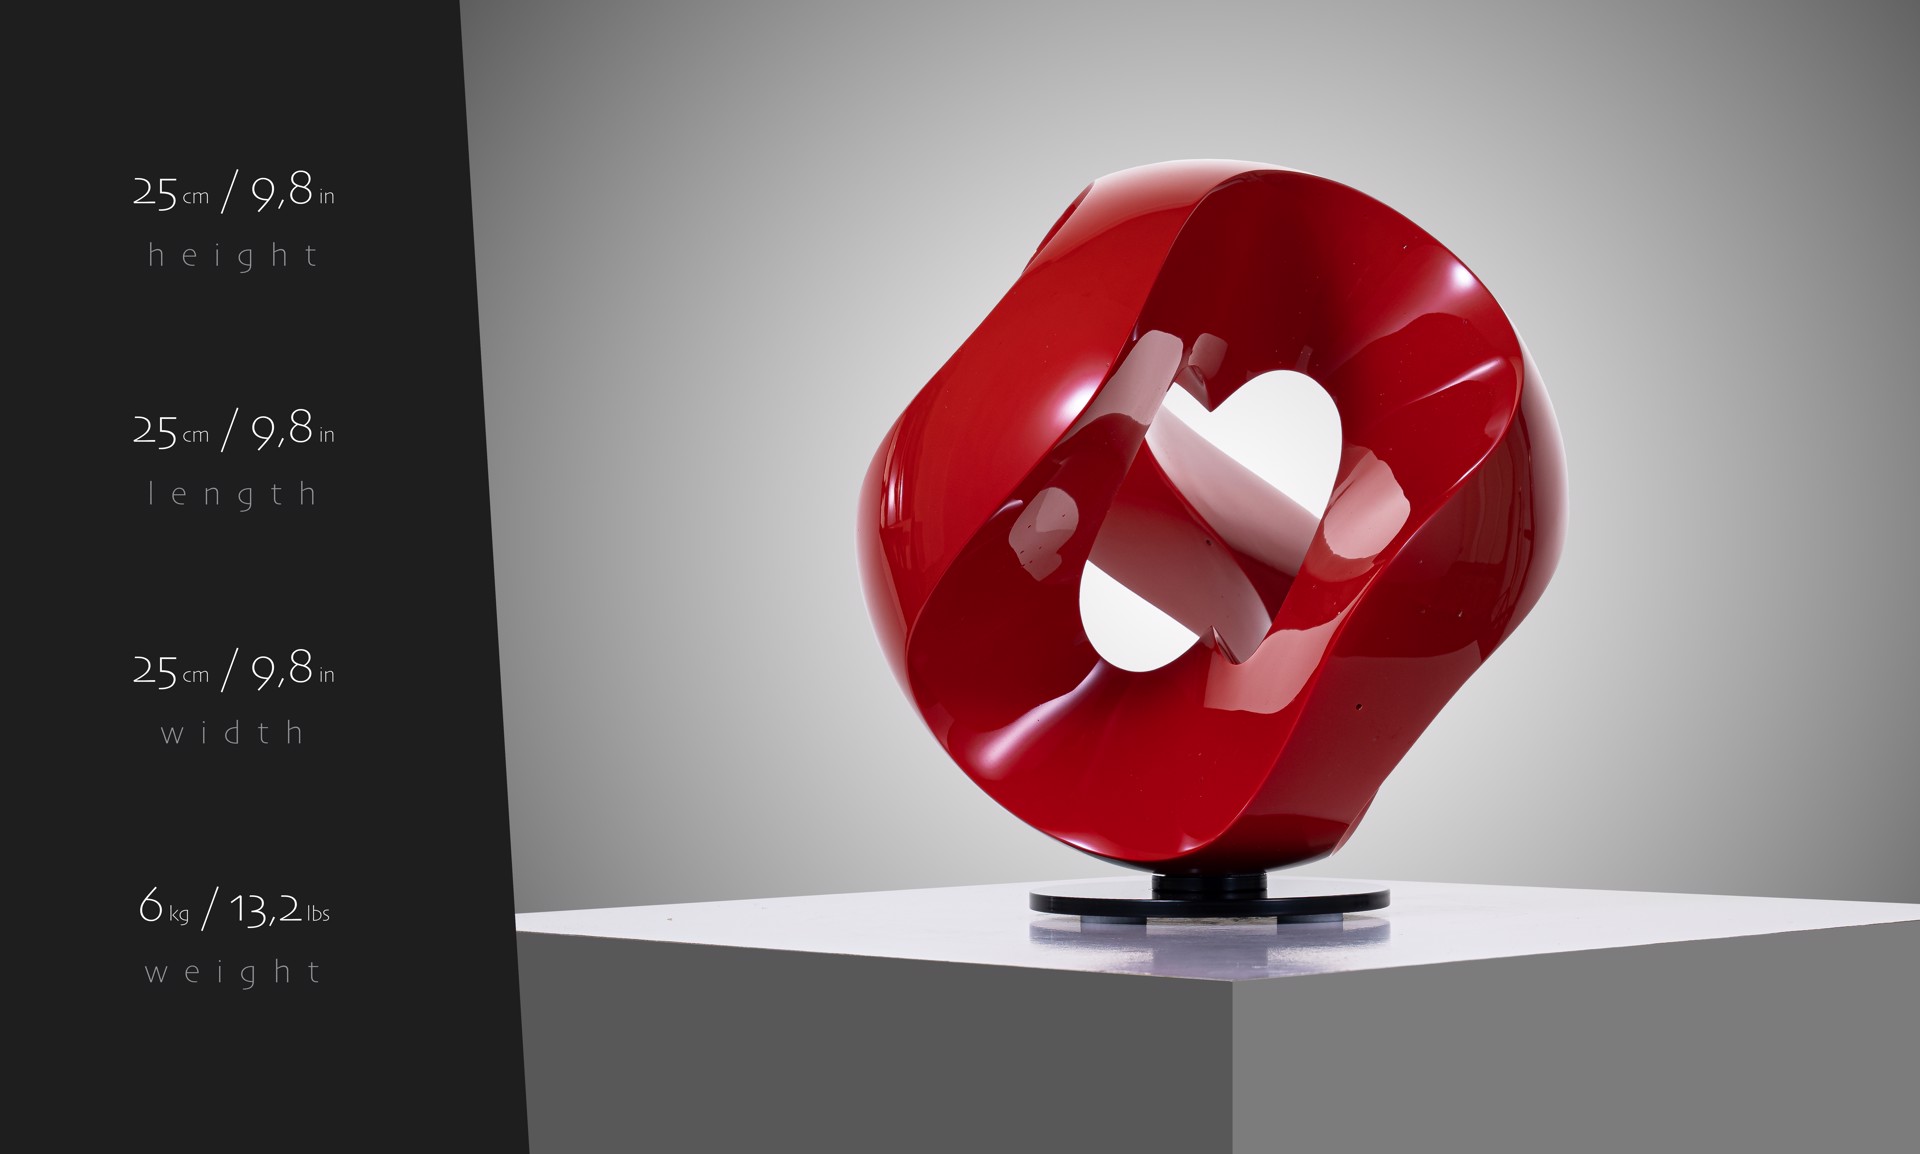 "Heart" Red Opaque by Vlastimil Beranek